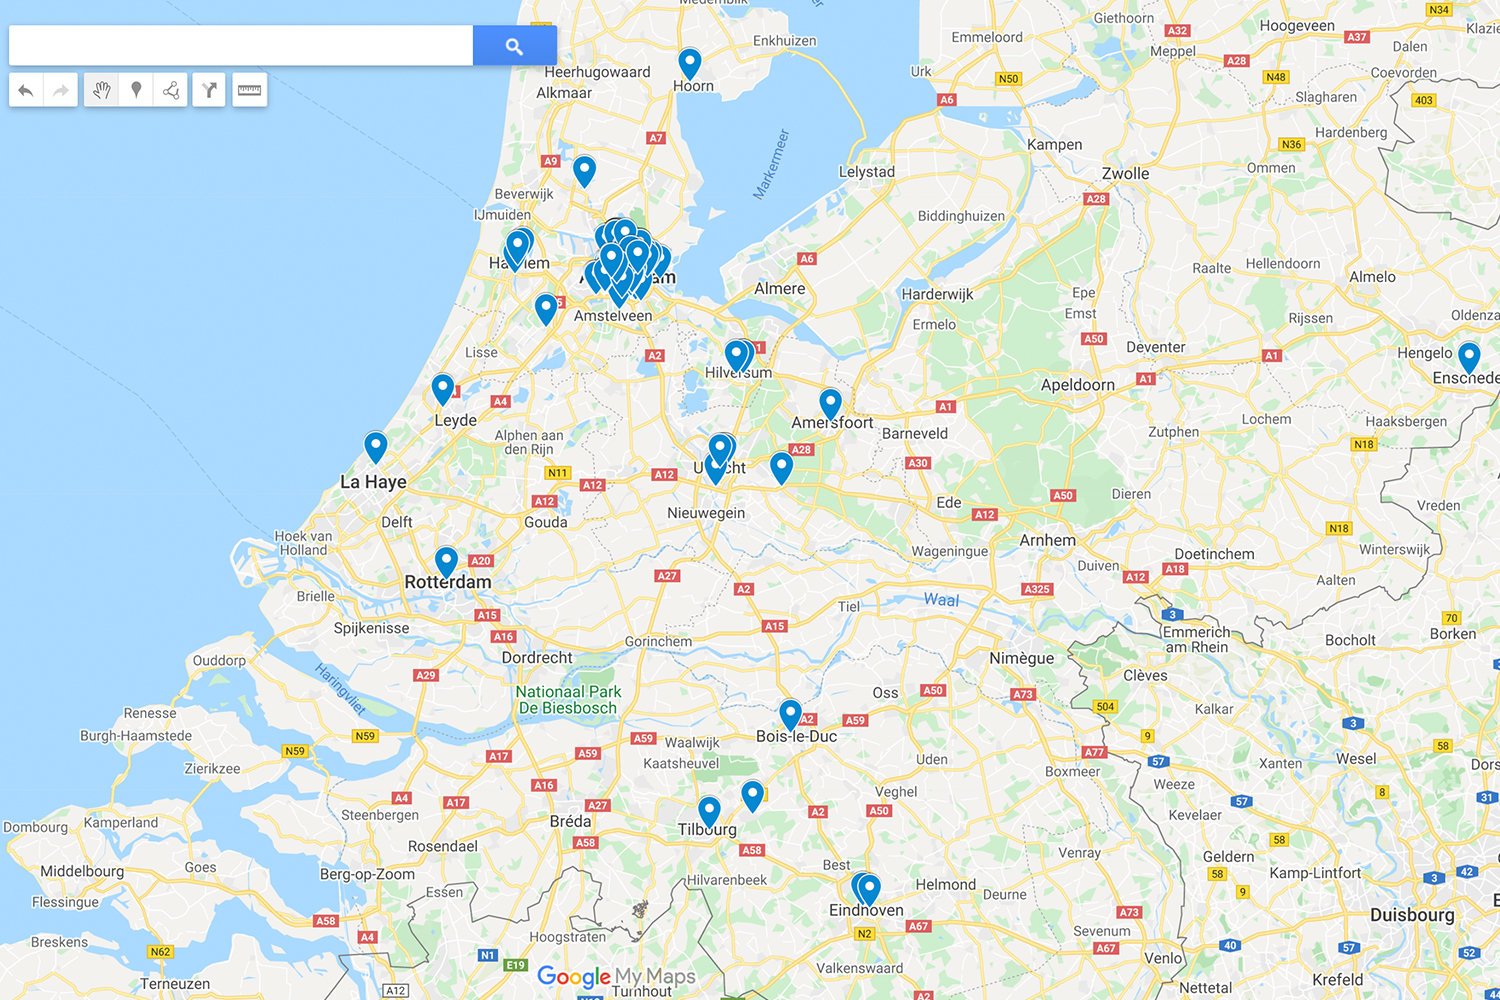 advertising-agencies-netherlands-amsterdam-eindhoven-utrecht-rotterdam-hague-marketing-ad-agencies-map-locations-2020-2021